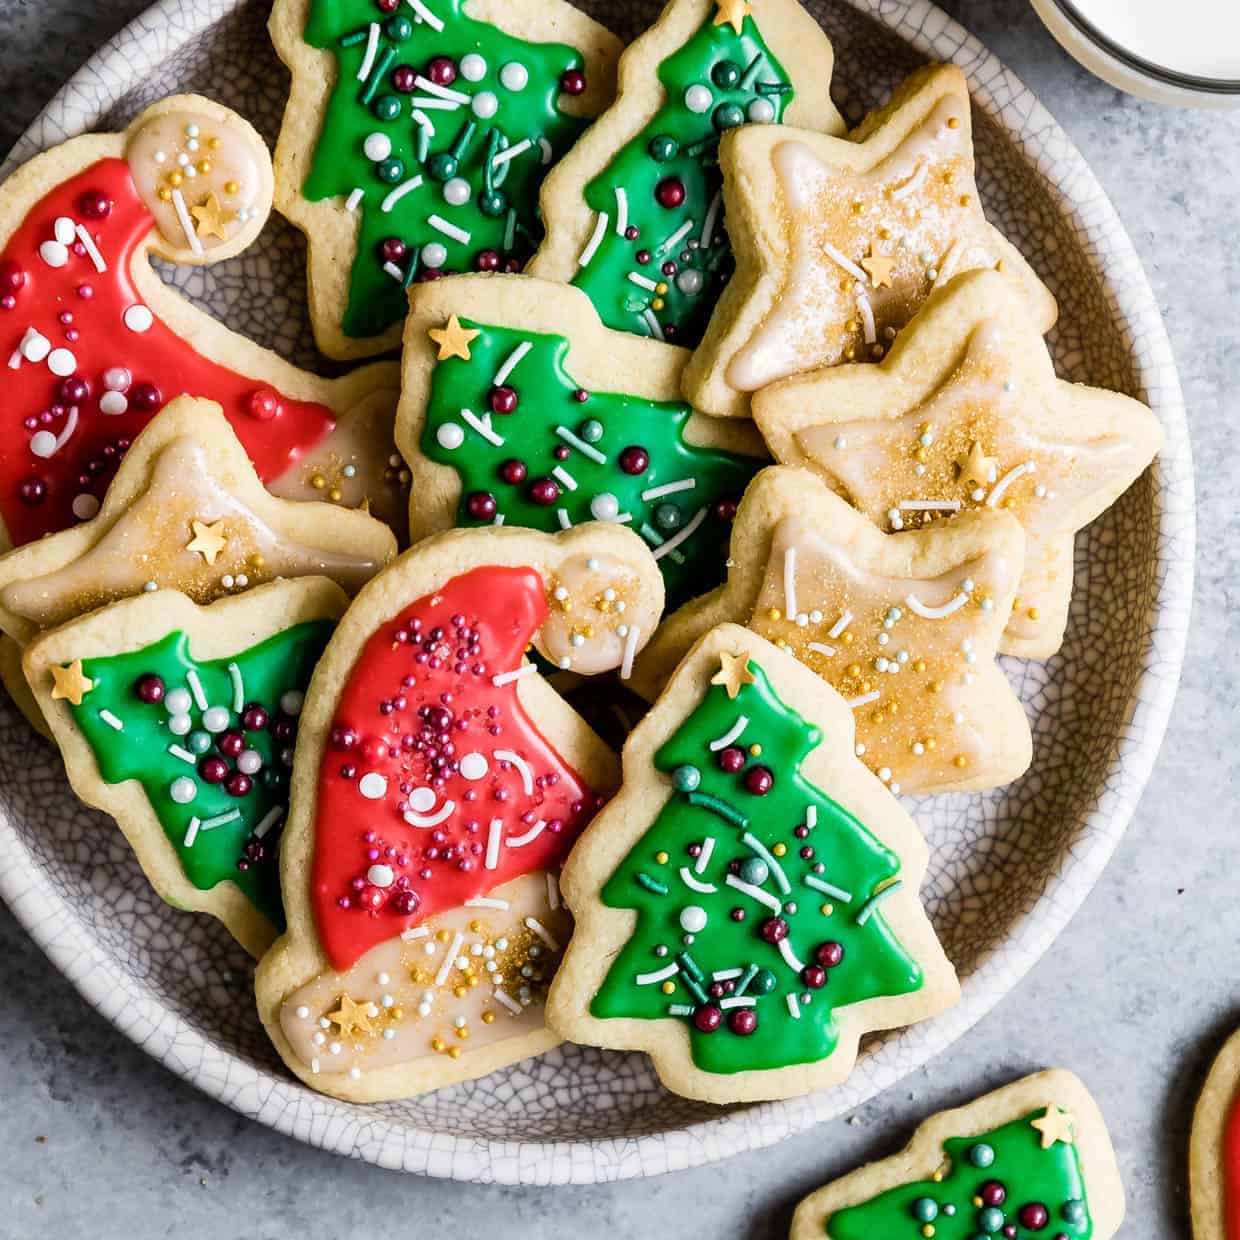 https://iambaker.net/wp-content/uploads/2018/12/Gluten-Free-Sugar-Cookies-Square-1.jpg